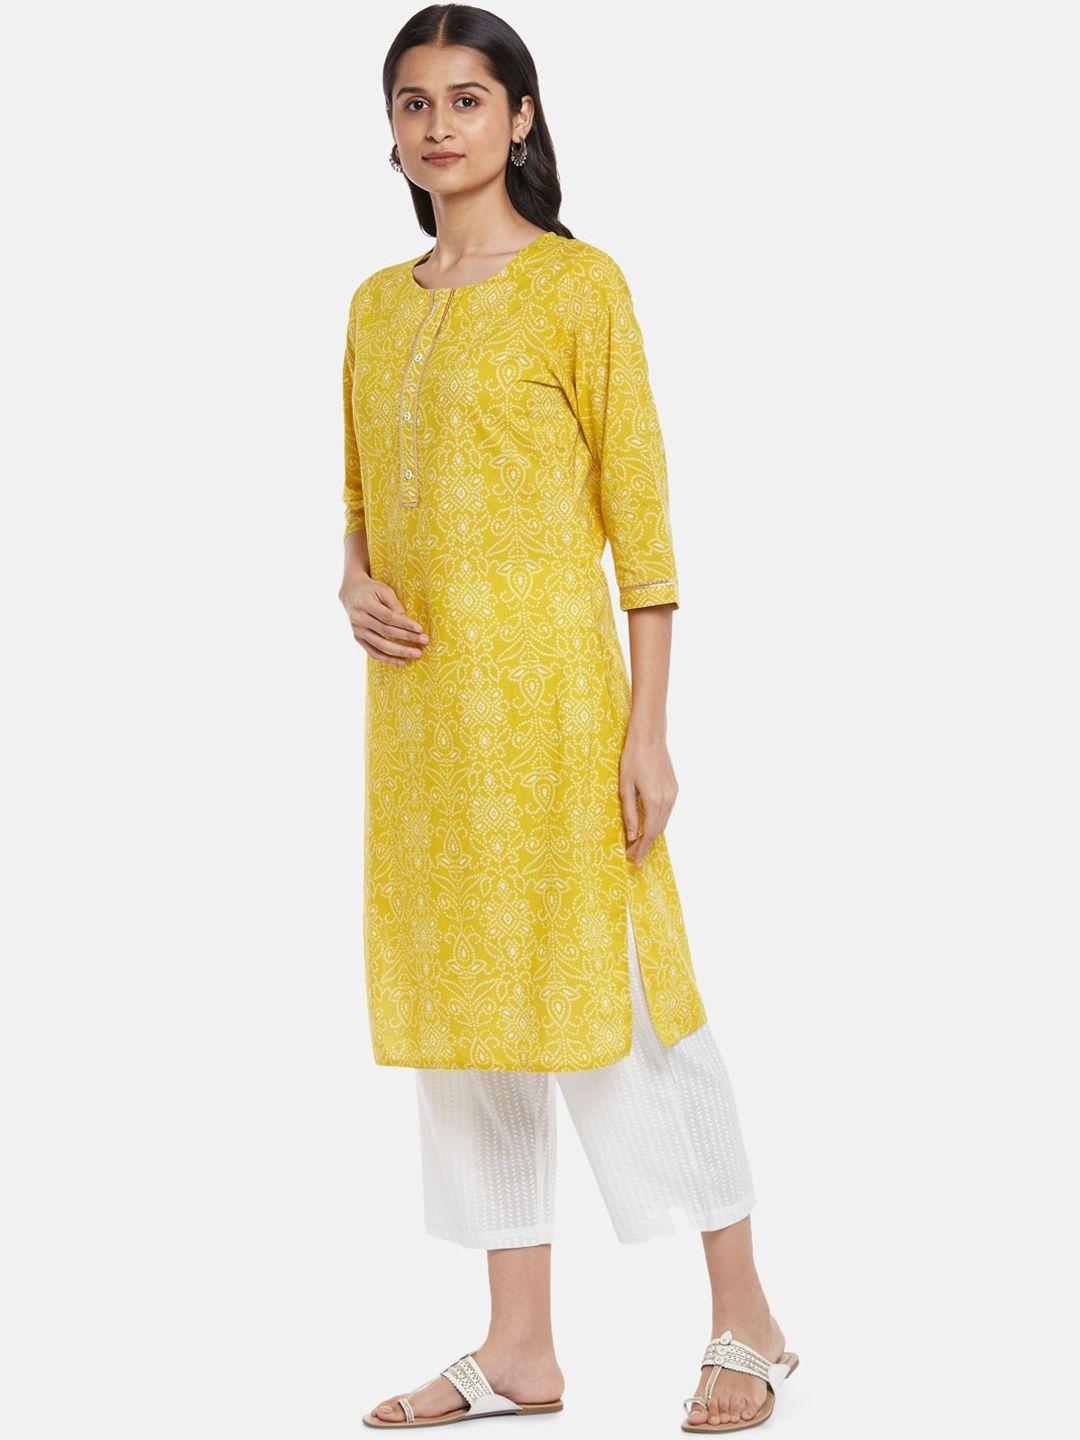 rangmanch by pantaloons women yellow bandhani printed pure cotton kurta with trousers